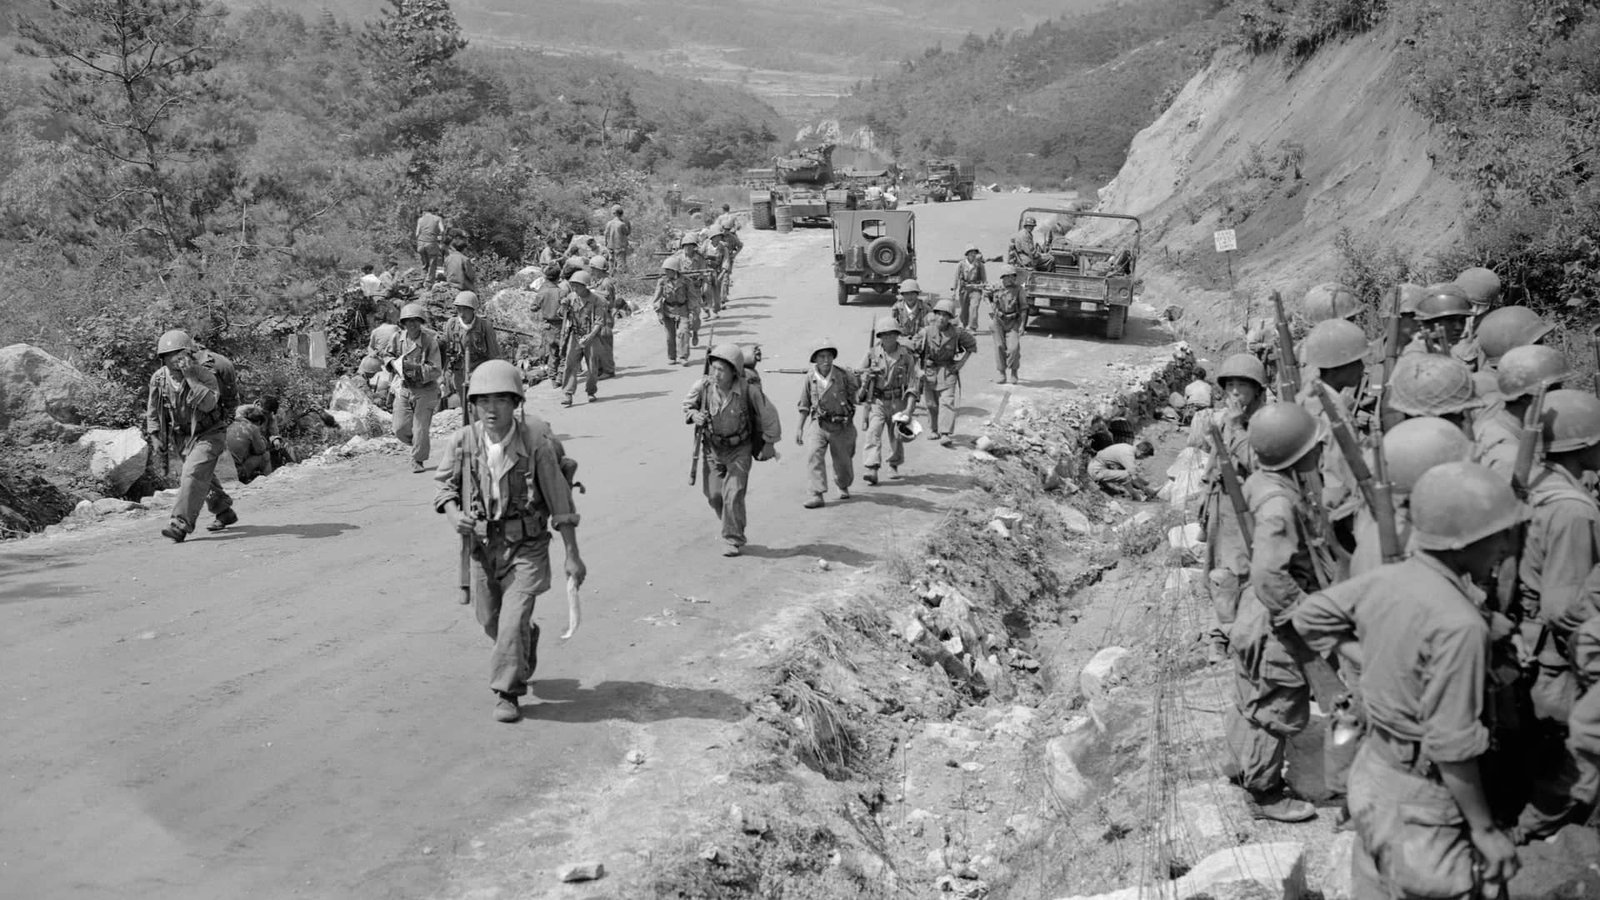 Major Events of the Korean War